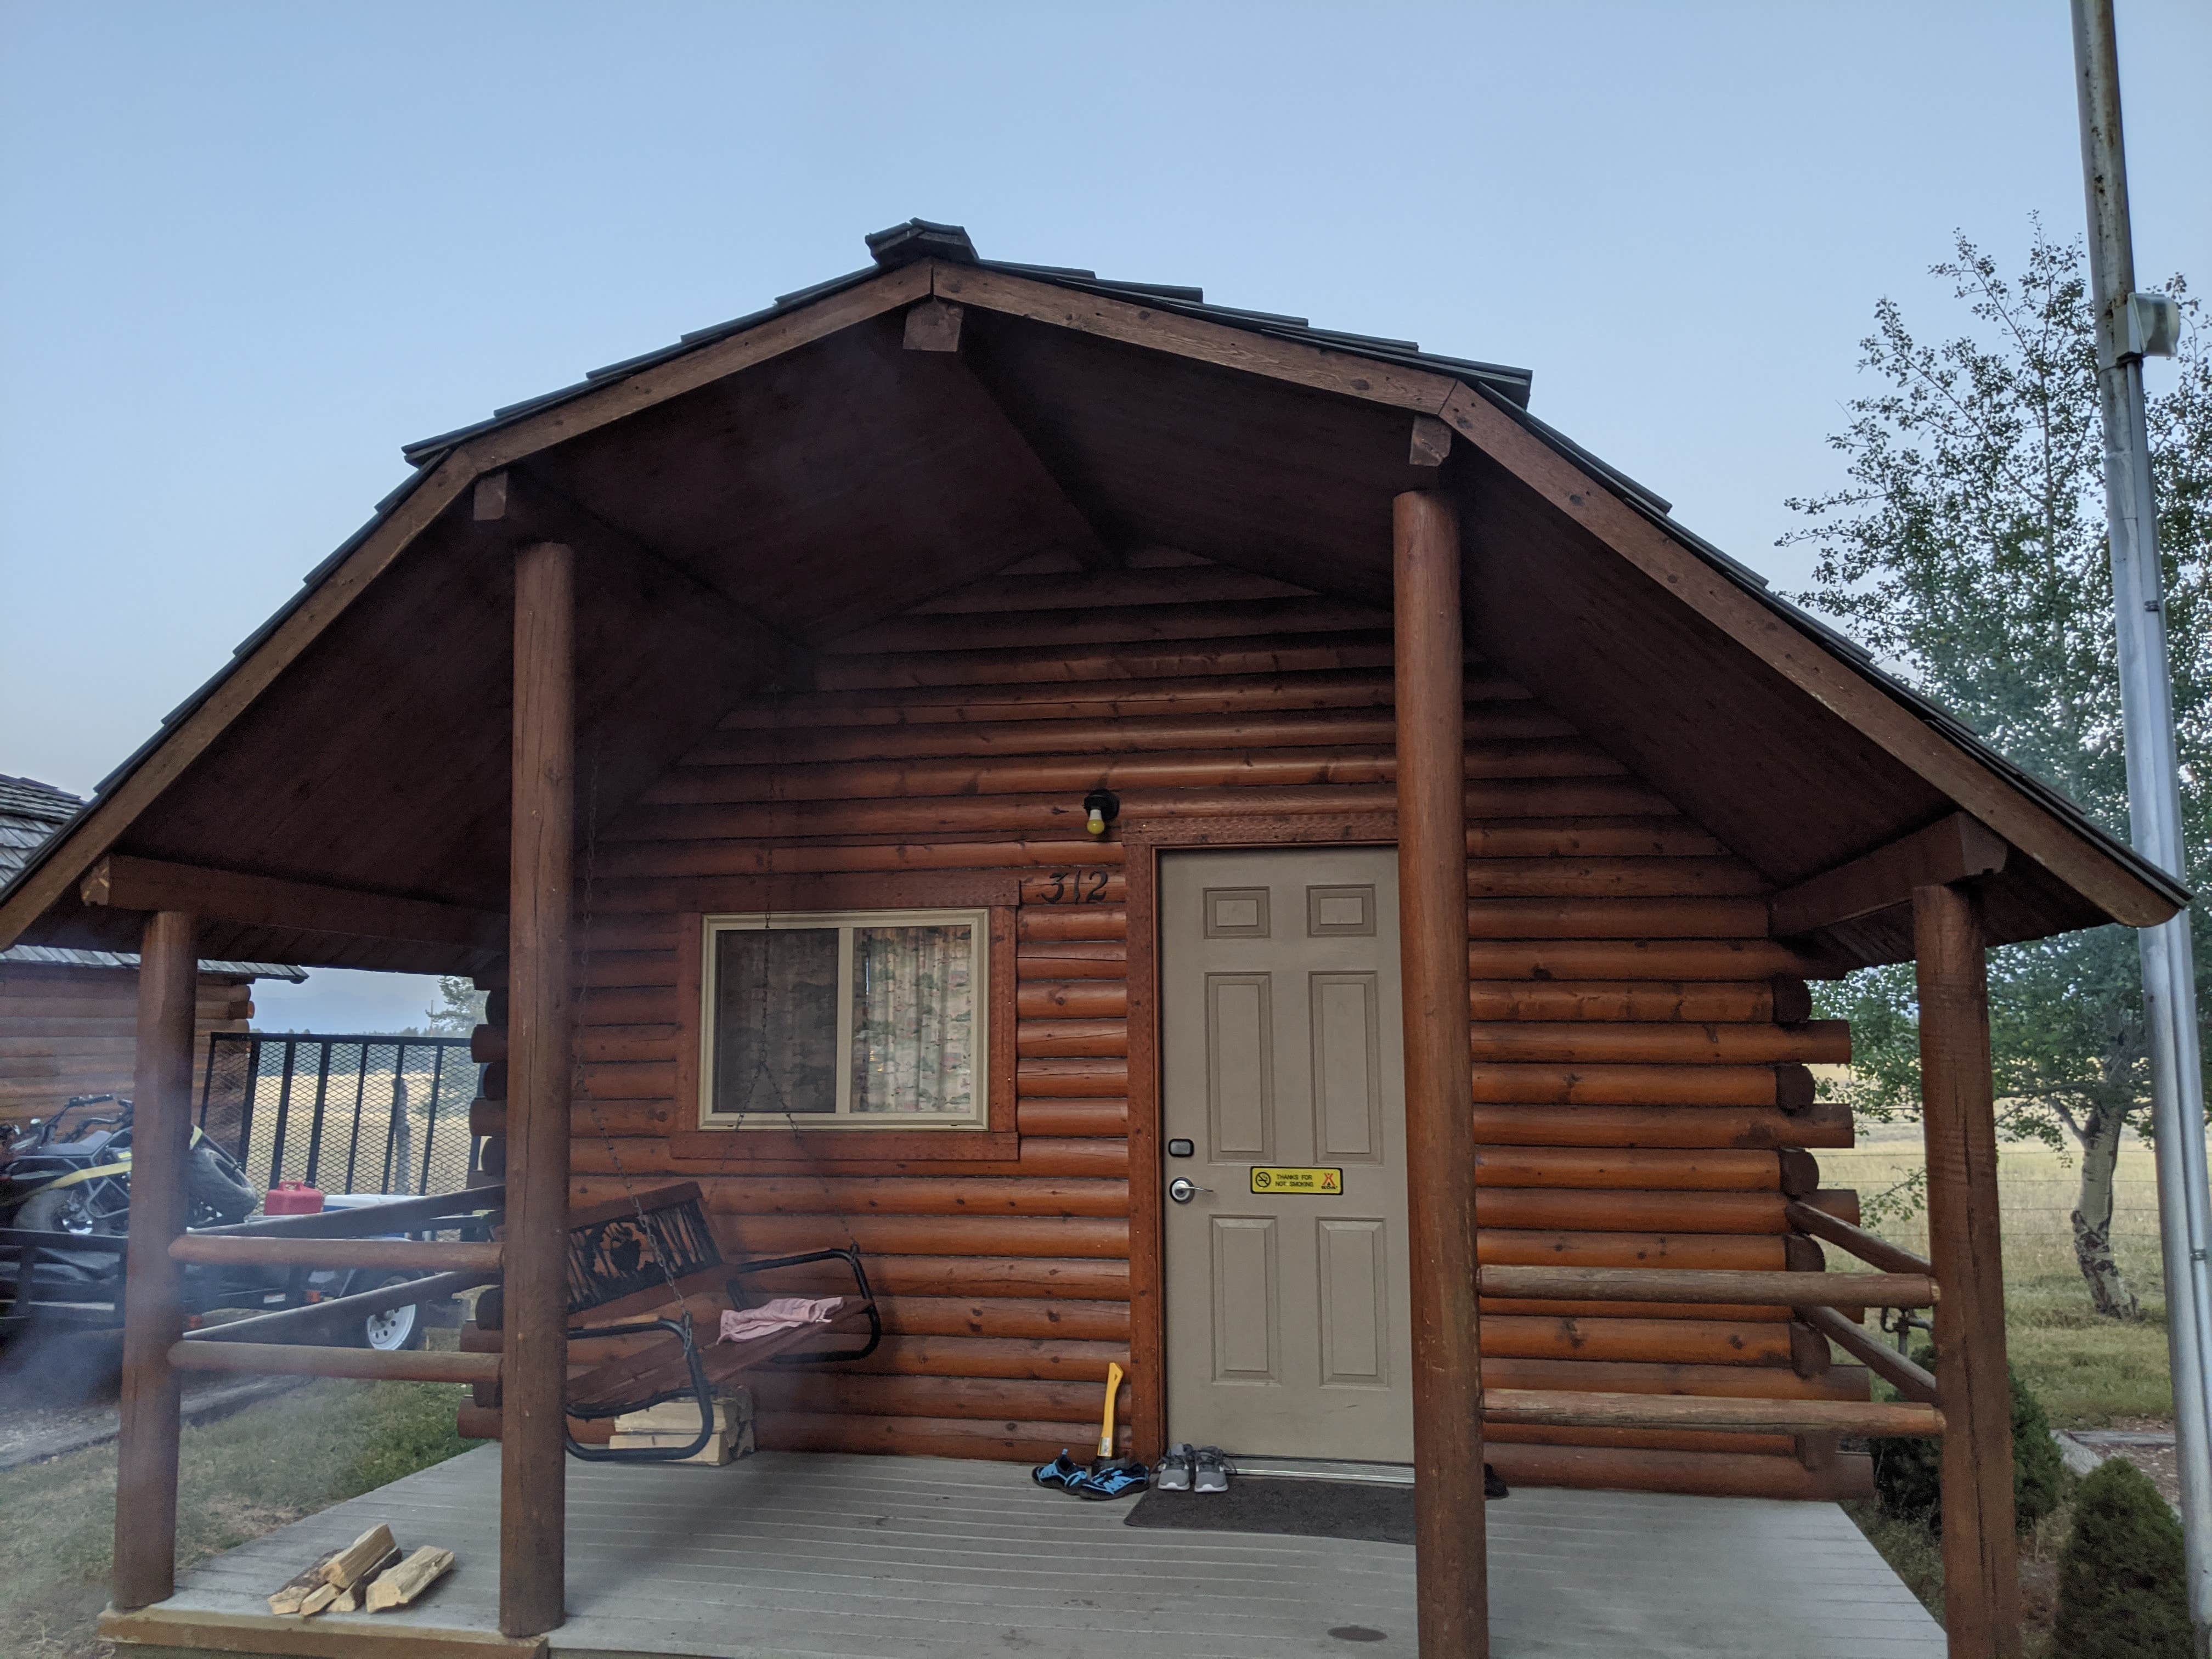 TERRA NOVA CABINS (West Yellowstone) - Campground Reviews, Photos